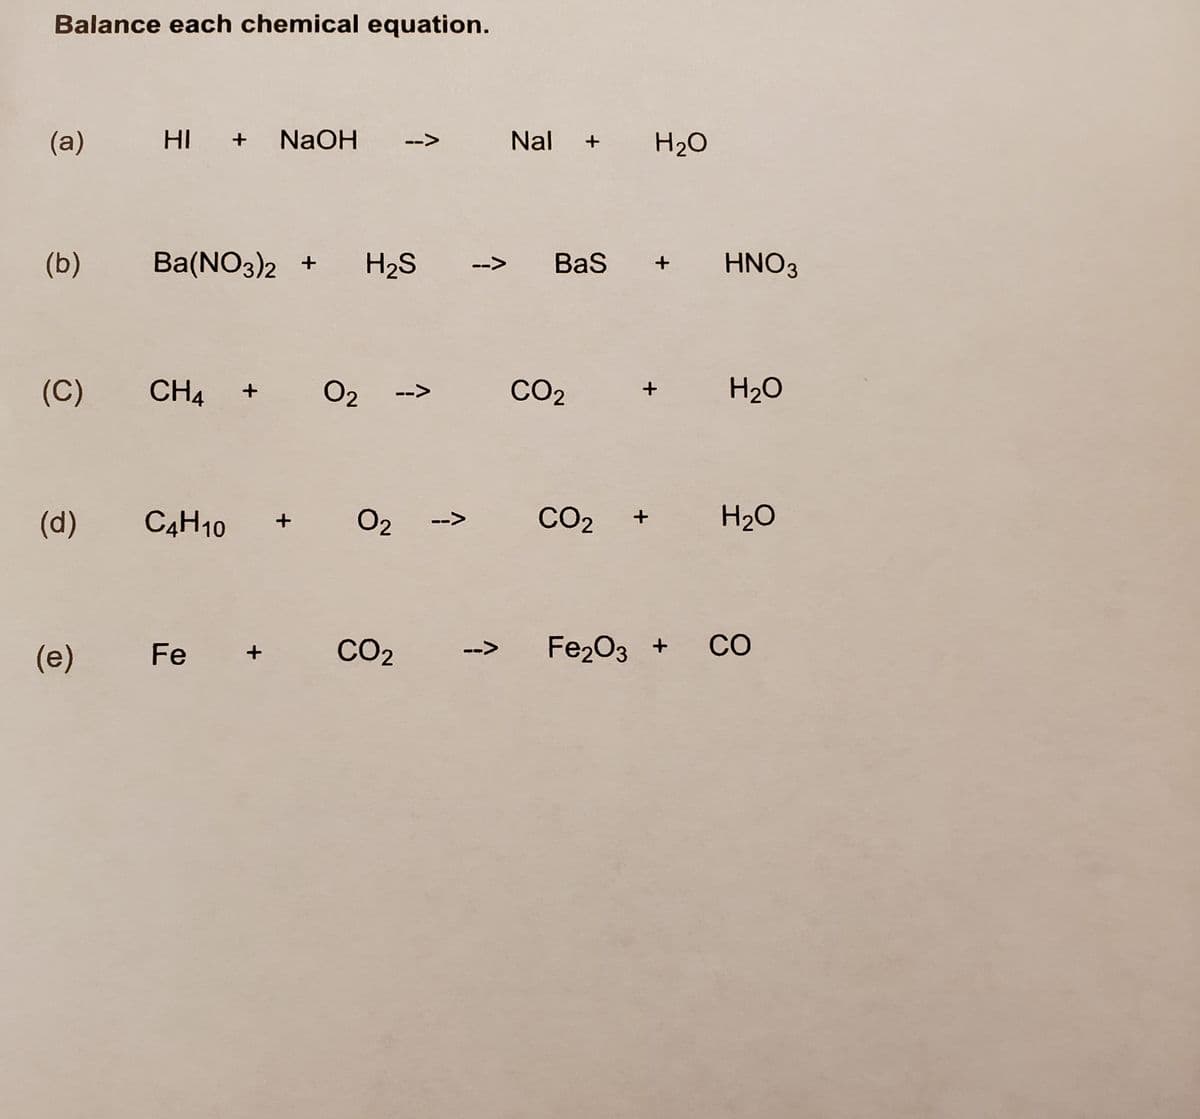 Balance each chemical equation.
(a)
HI +
NaOH
Nal
H2O
-->
(b)
Ba(NO3)2 +
H2S
Bas
HNO3
-->
(C)
CH4
O2
CO2
H20
-->
(d)
C4H10
O2
CO2
H2O
-->
CO2
Fe2O3 +
CO
(е)
Fe
-->
